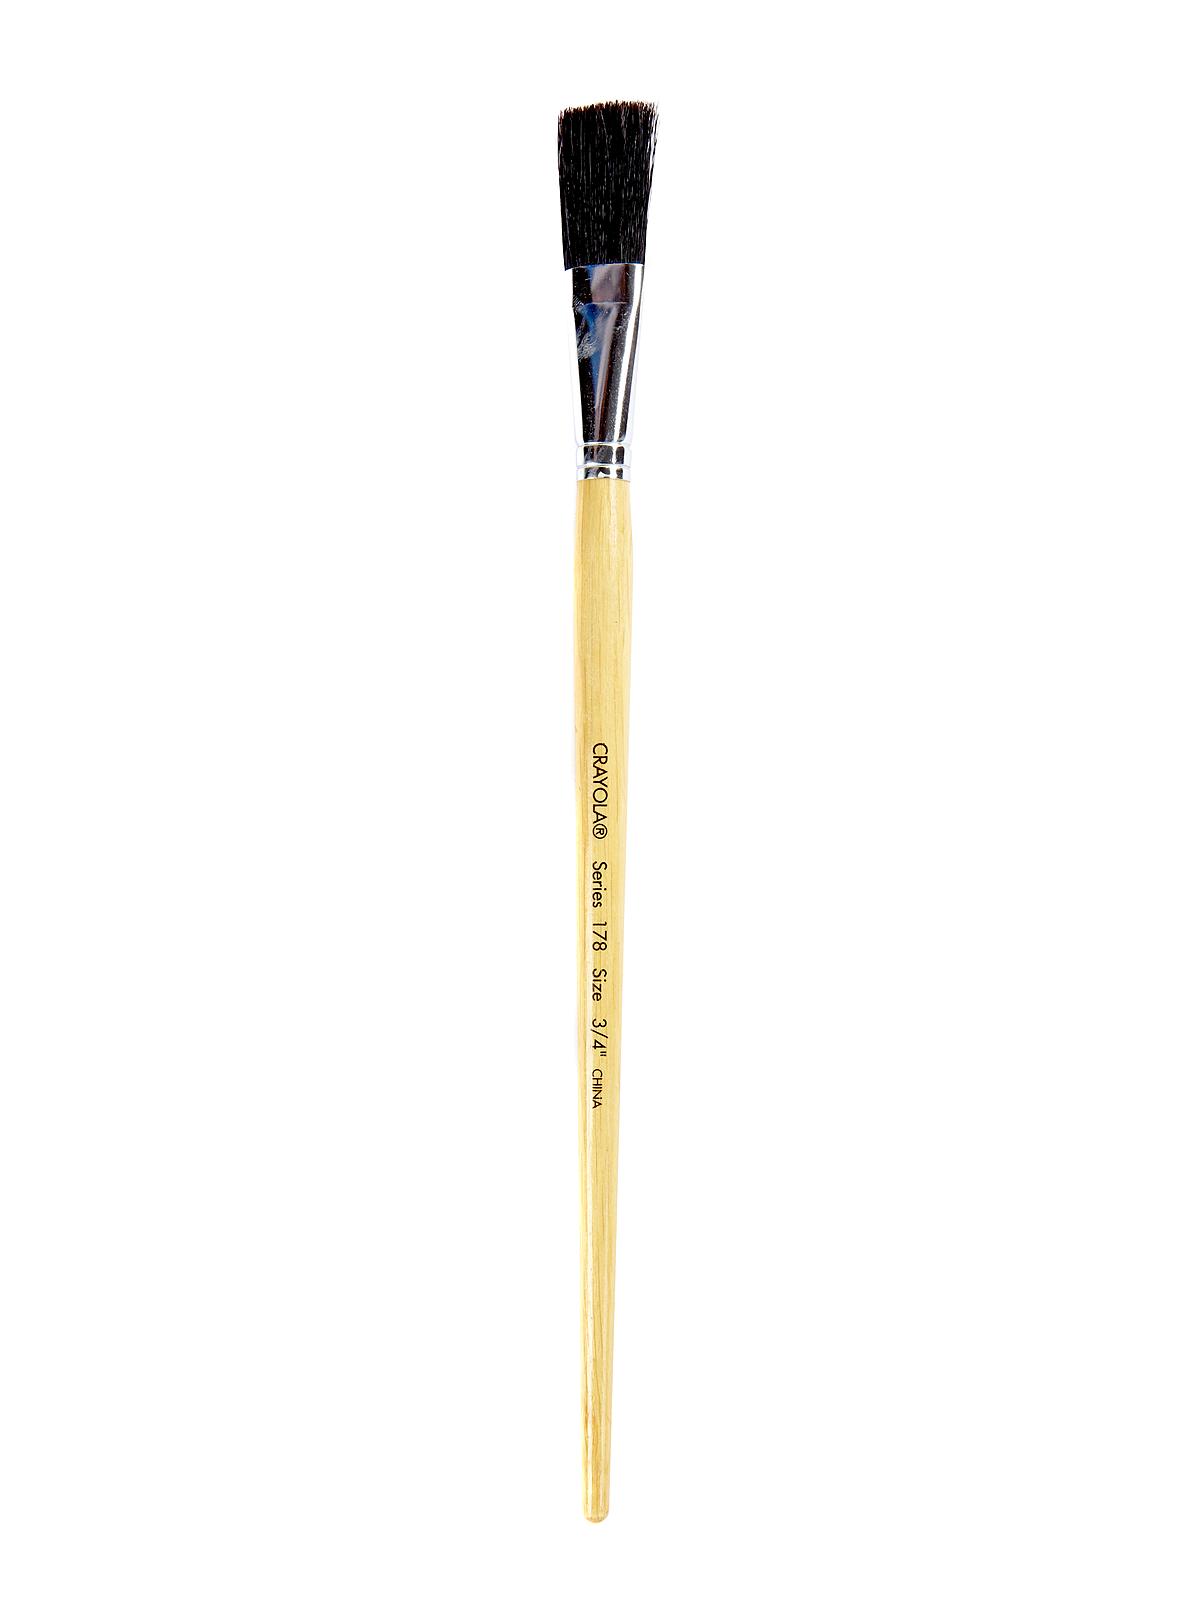 Series 178 Long Handled Black Bristle Brushes 3 4 in.